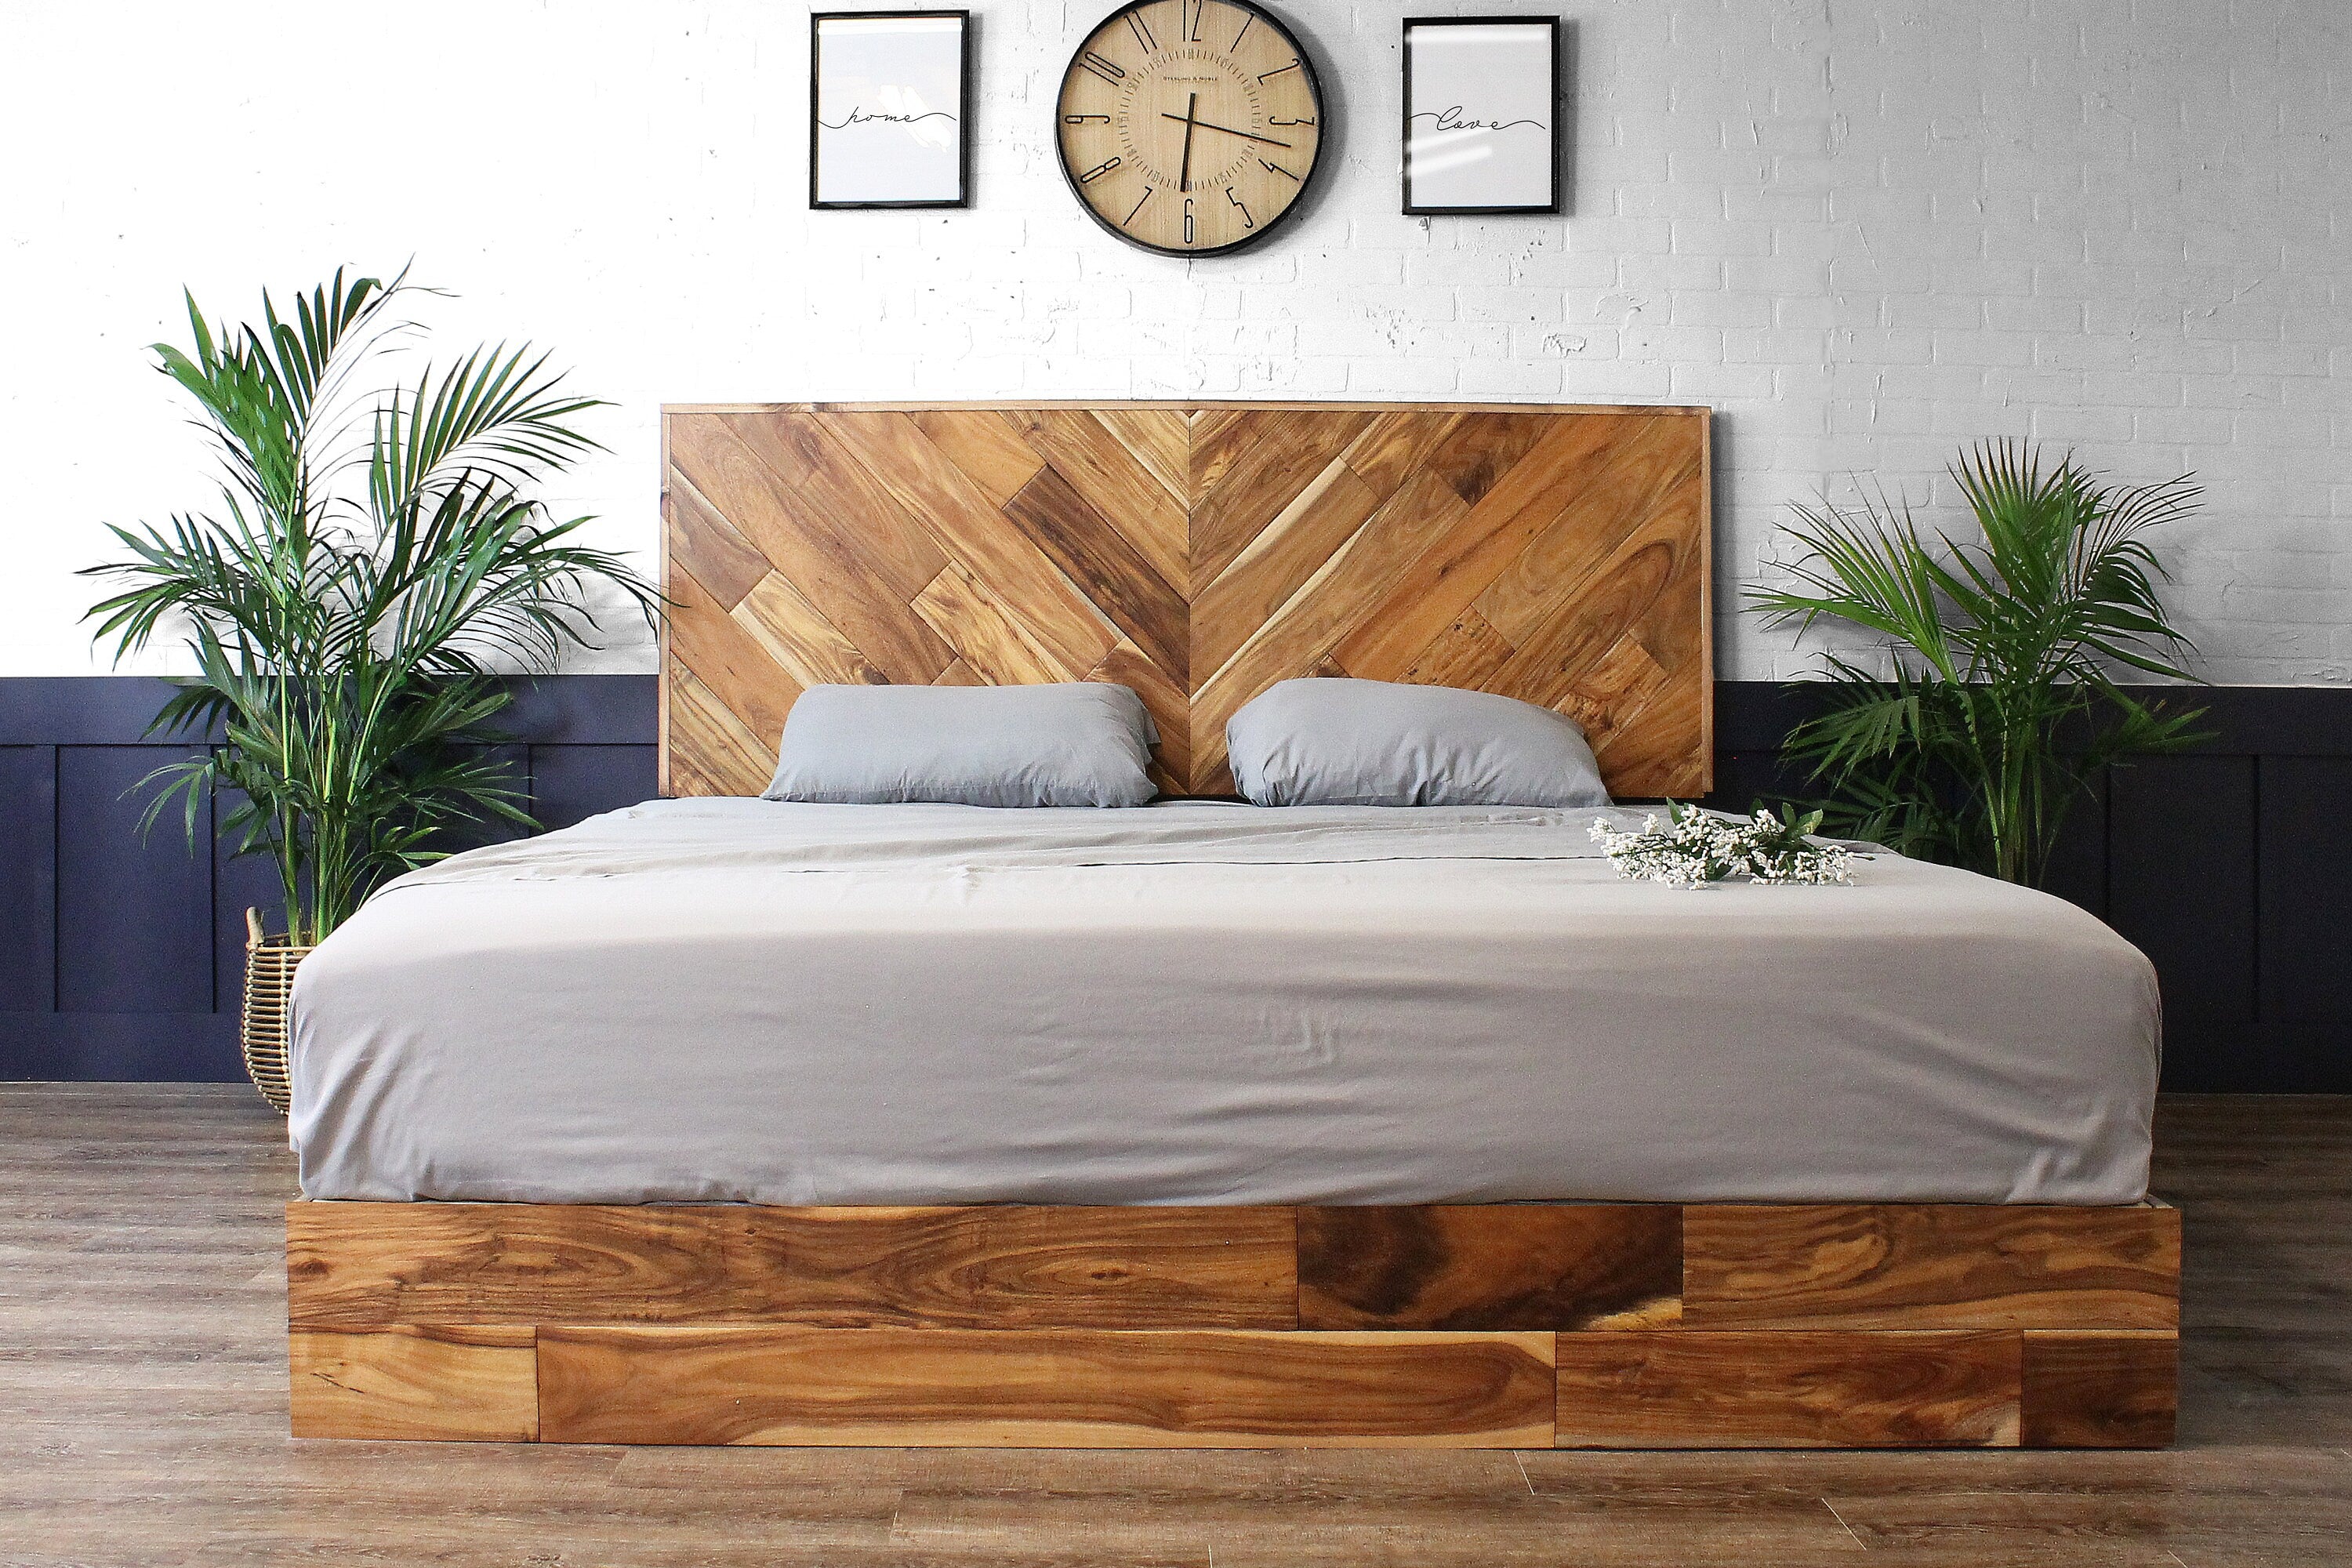 Mountaineer Bed Frame - Modern Rustic Style - Chevron - Handmade